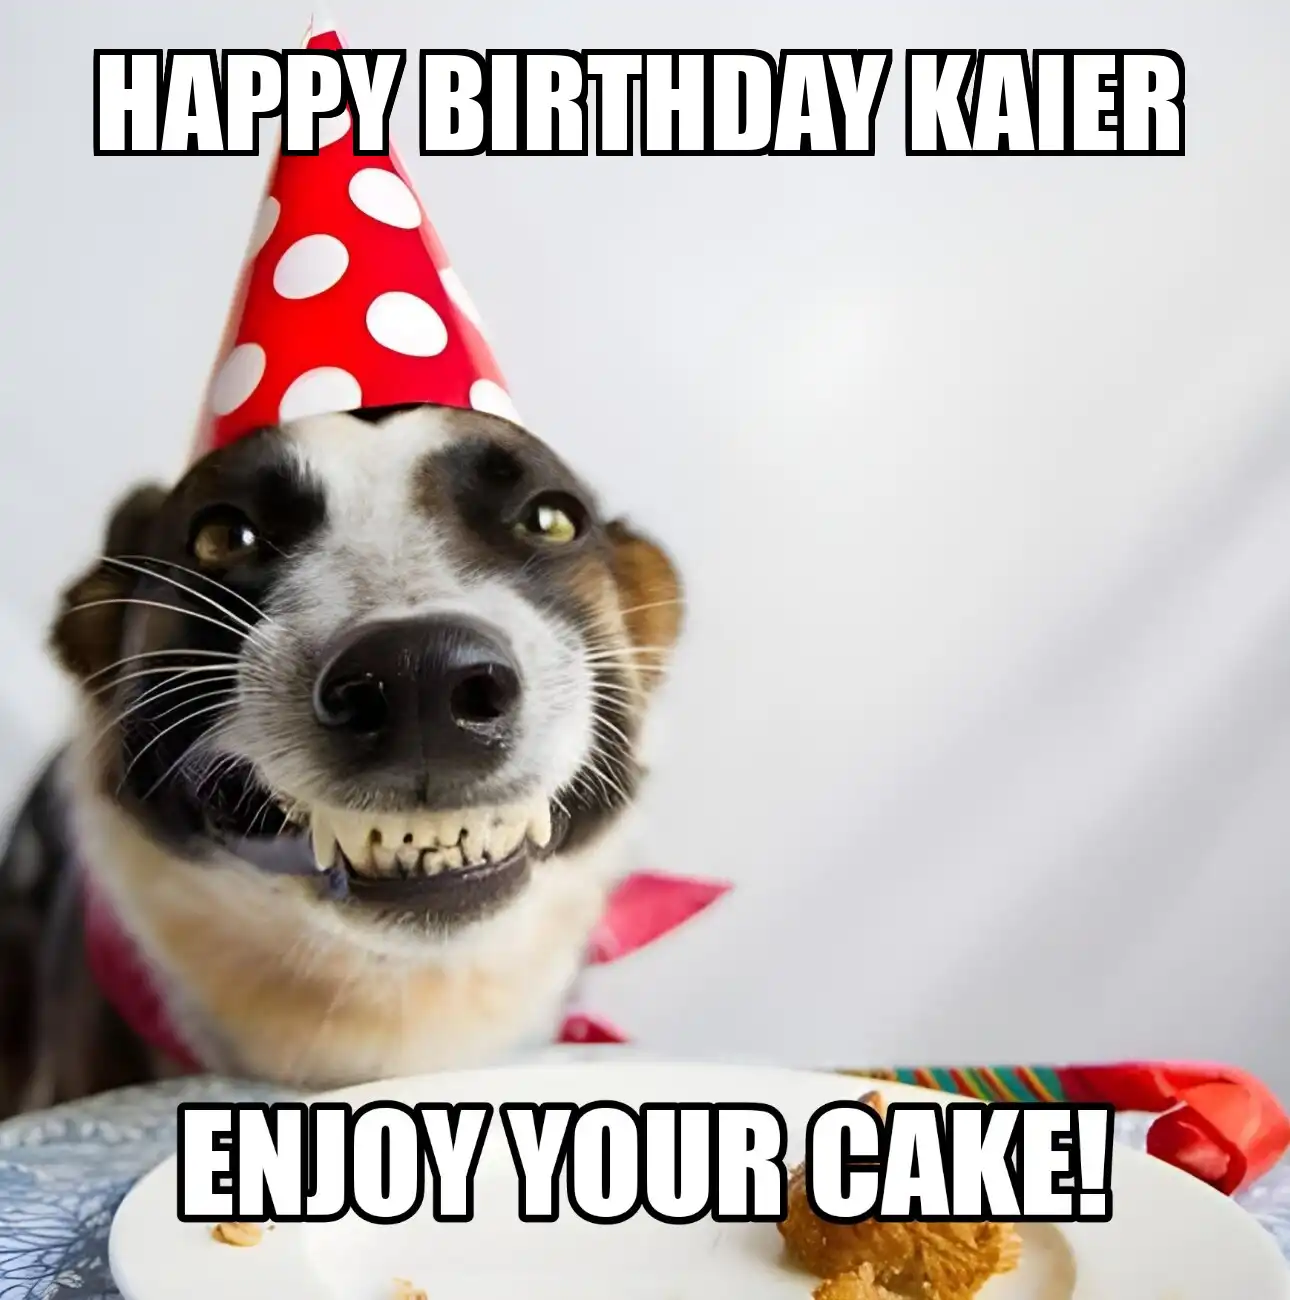 Happy Birthday Kaier Enjoy Your Cake Dog Meme